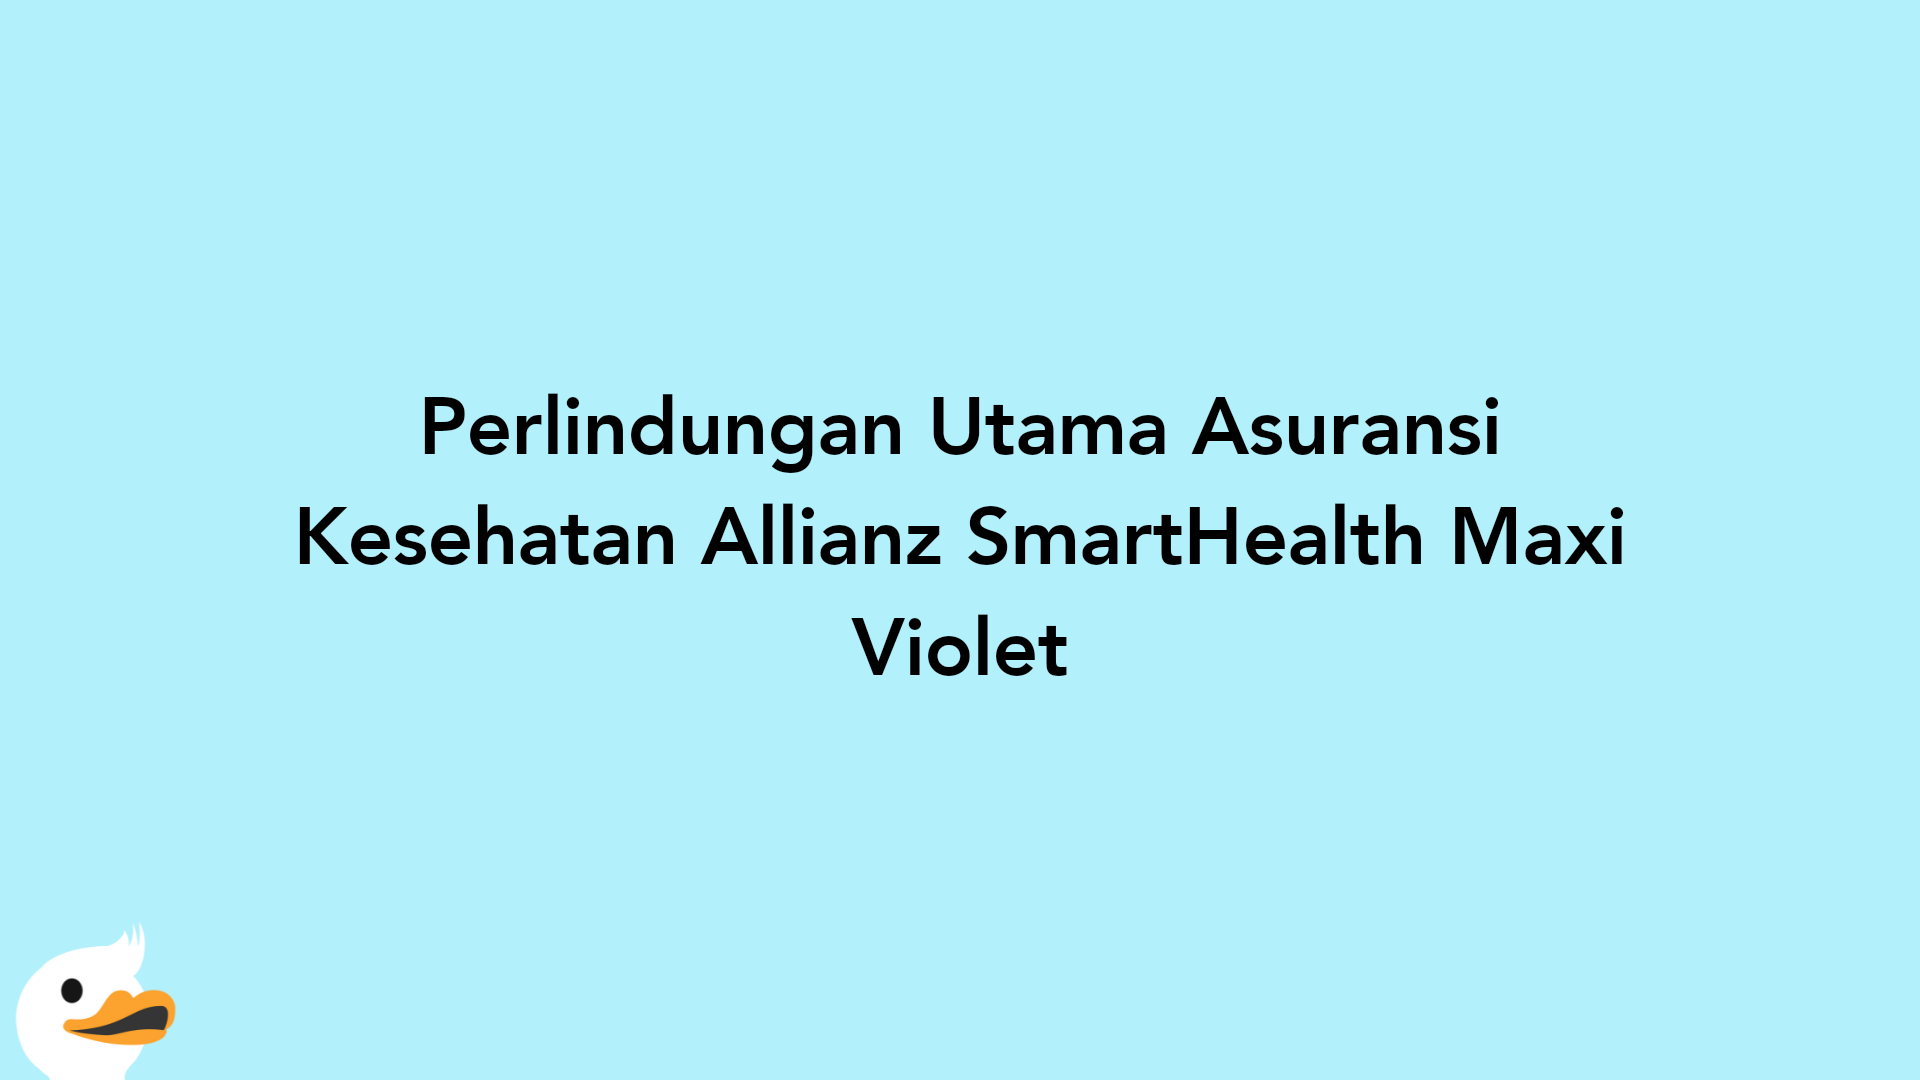 Perlindungan Utama Asuransi Kesehatan Allianz SmartHealth Maxi Violet